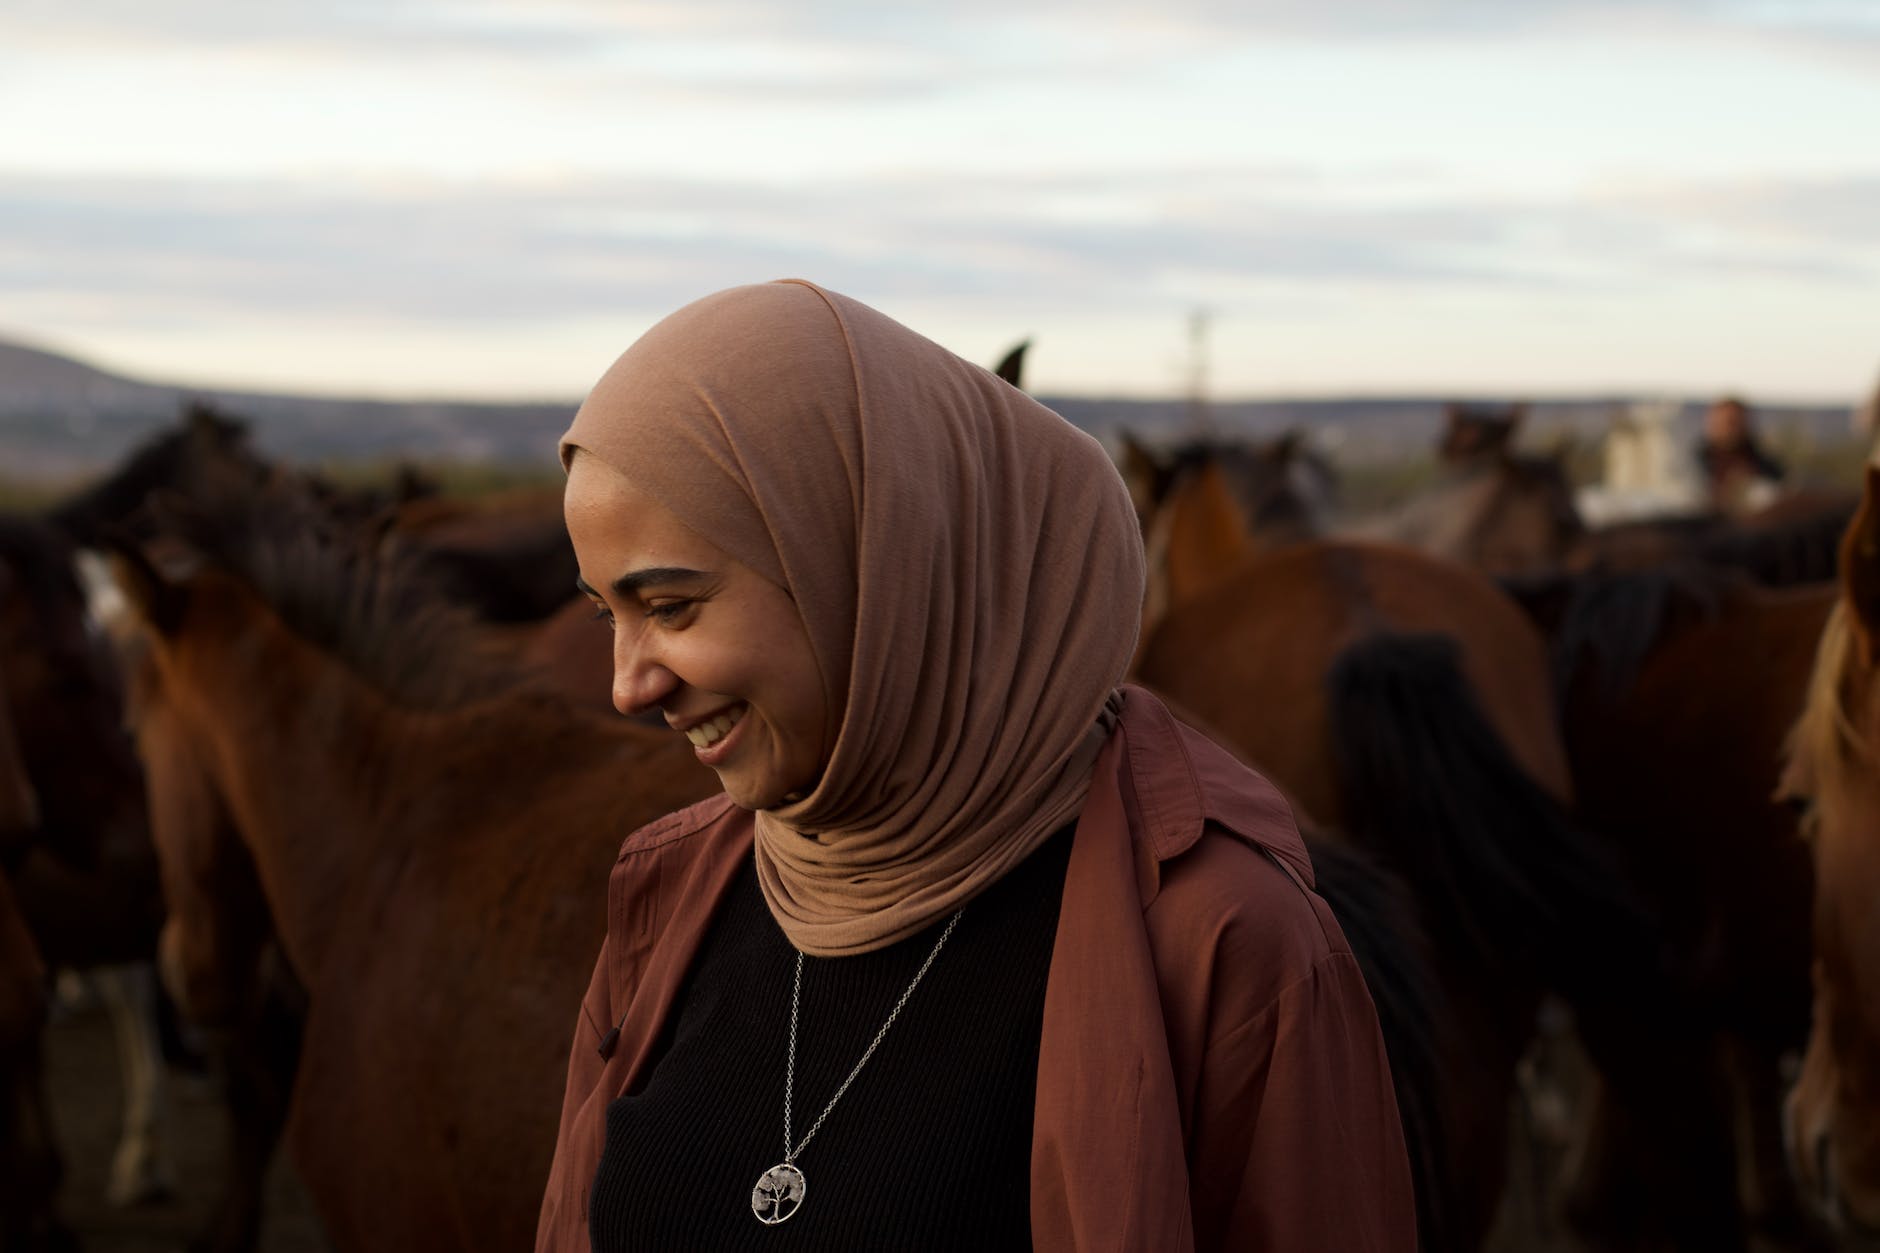 woman in hijab among horses